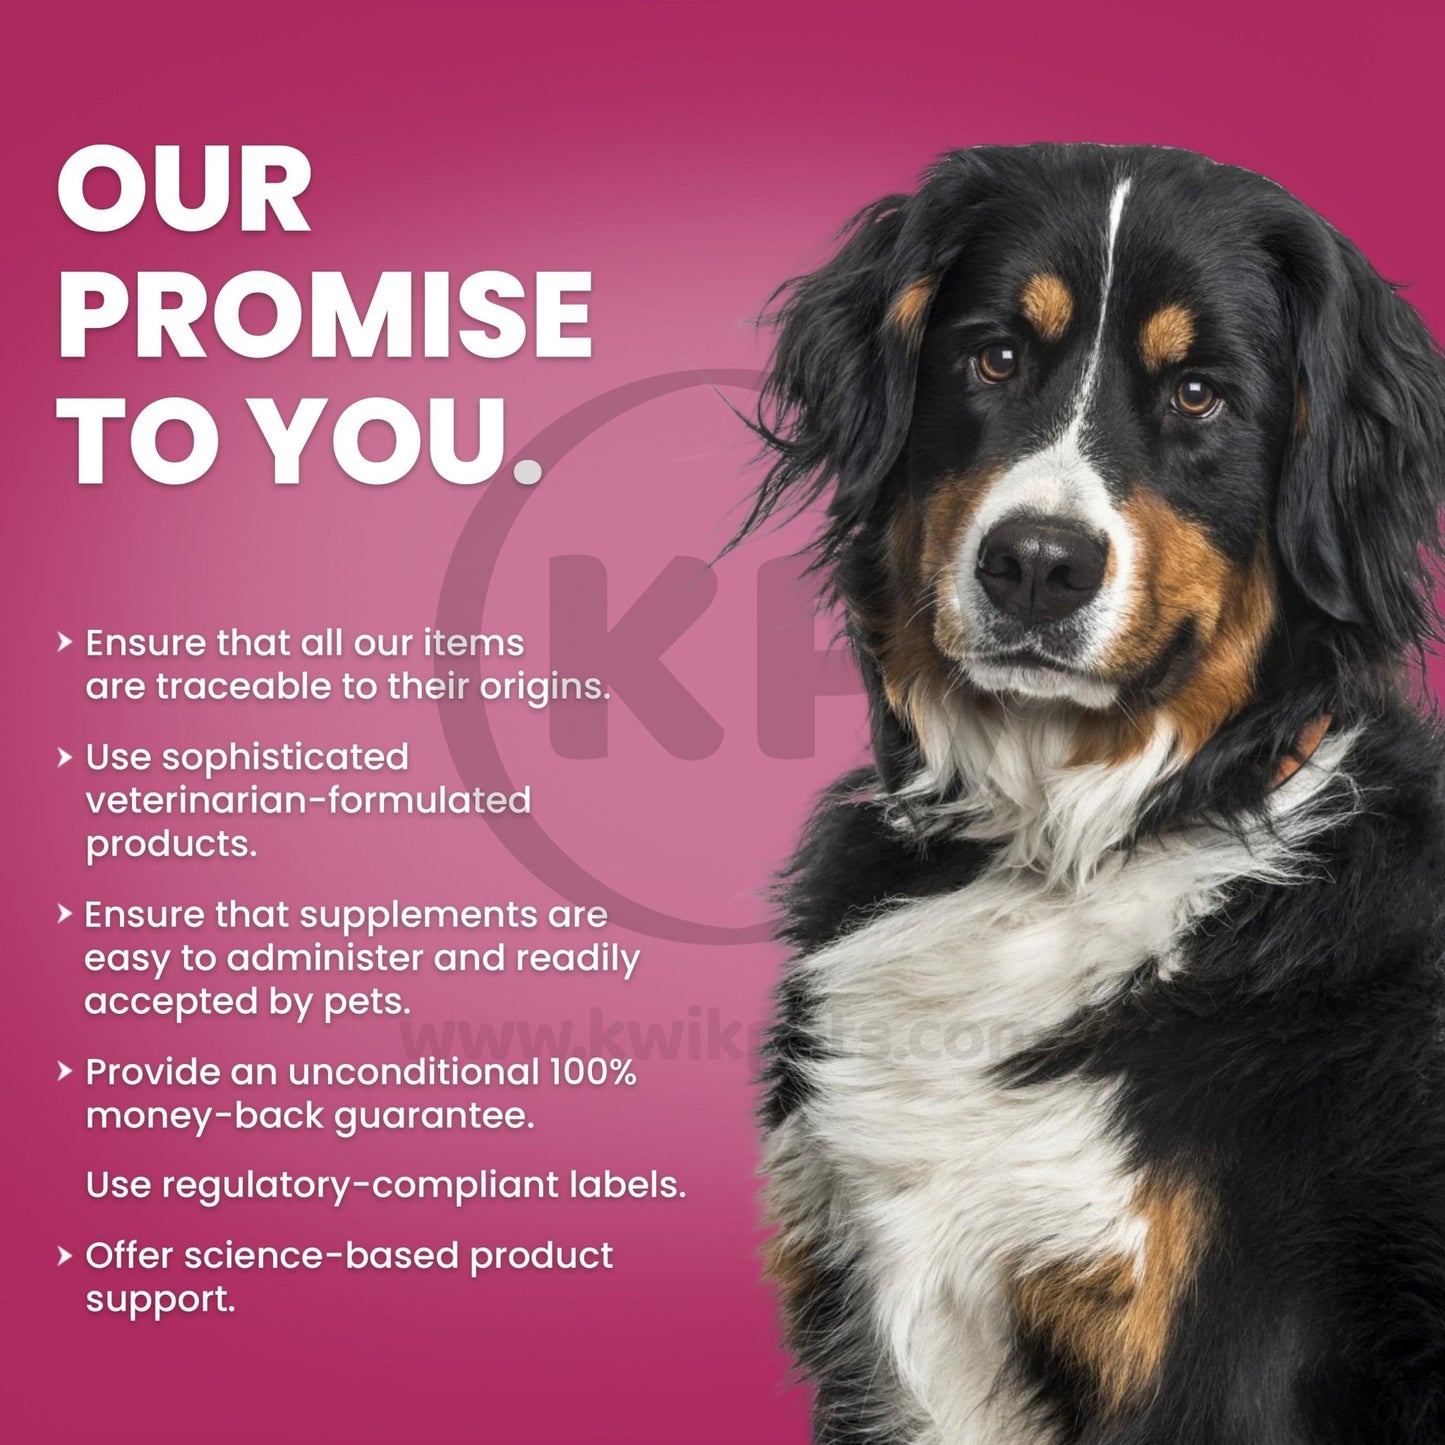 Nutri-Vet Liquid Bandage Spray for Dogs, 2 oz - Kwik Pets